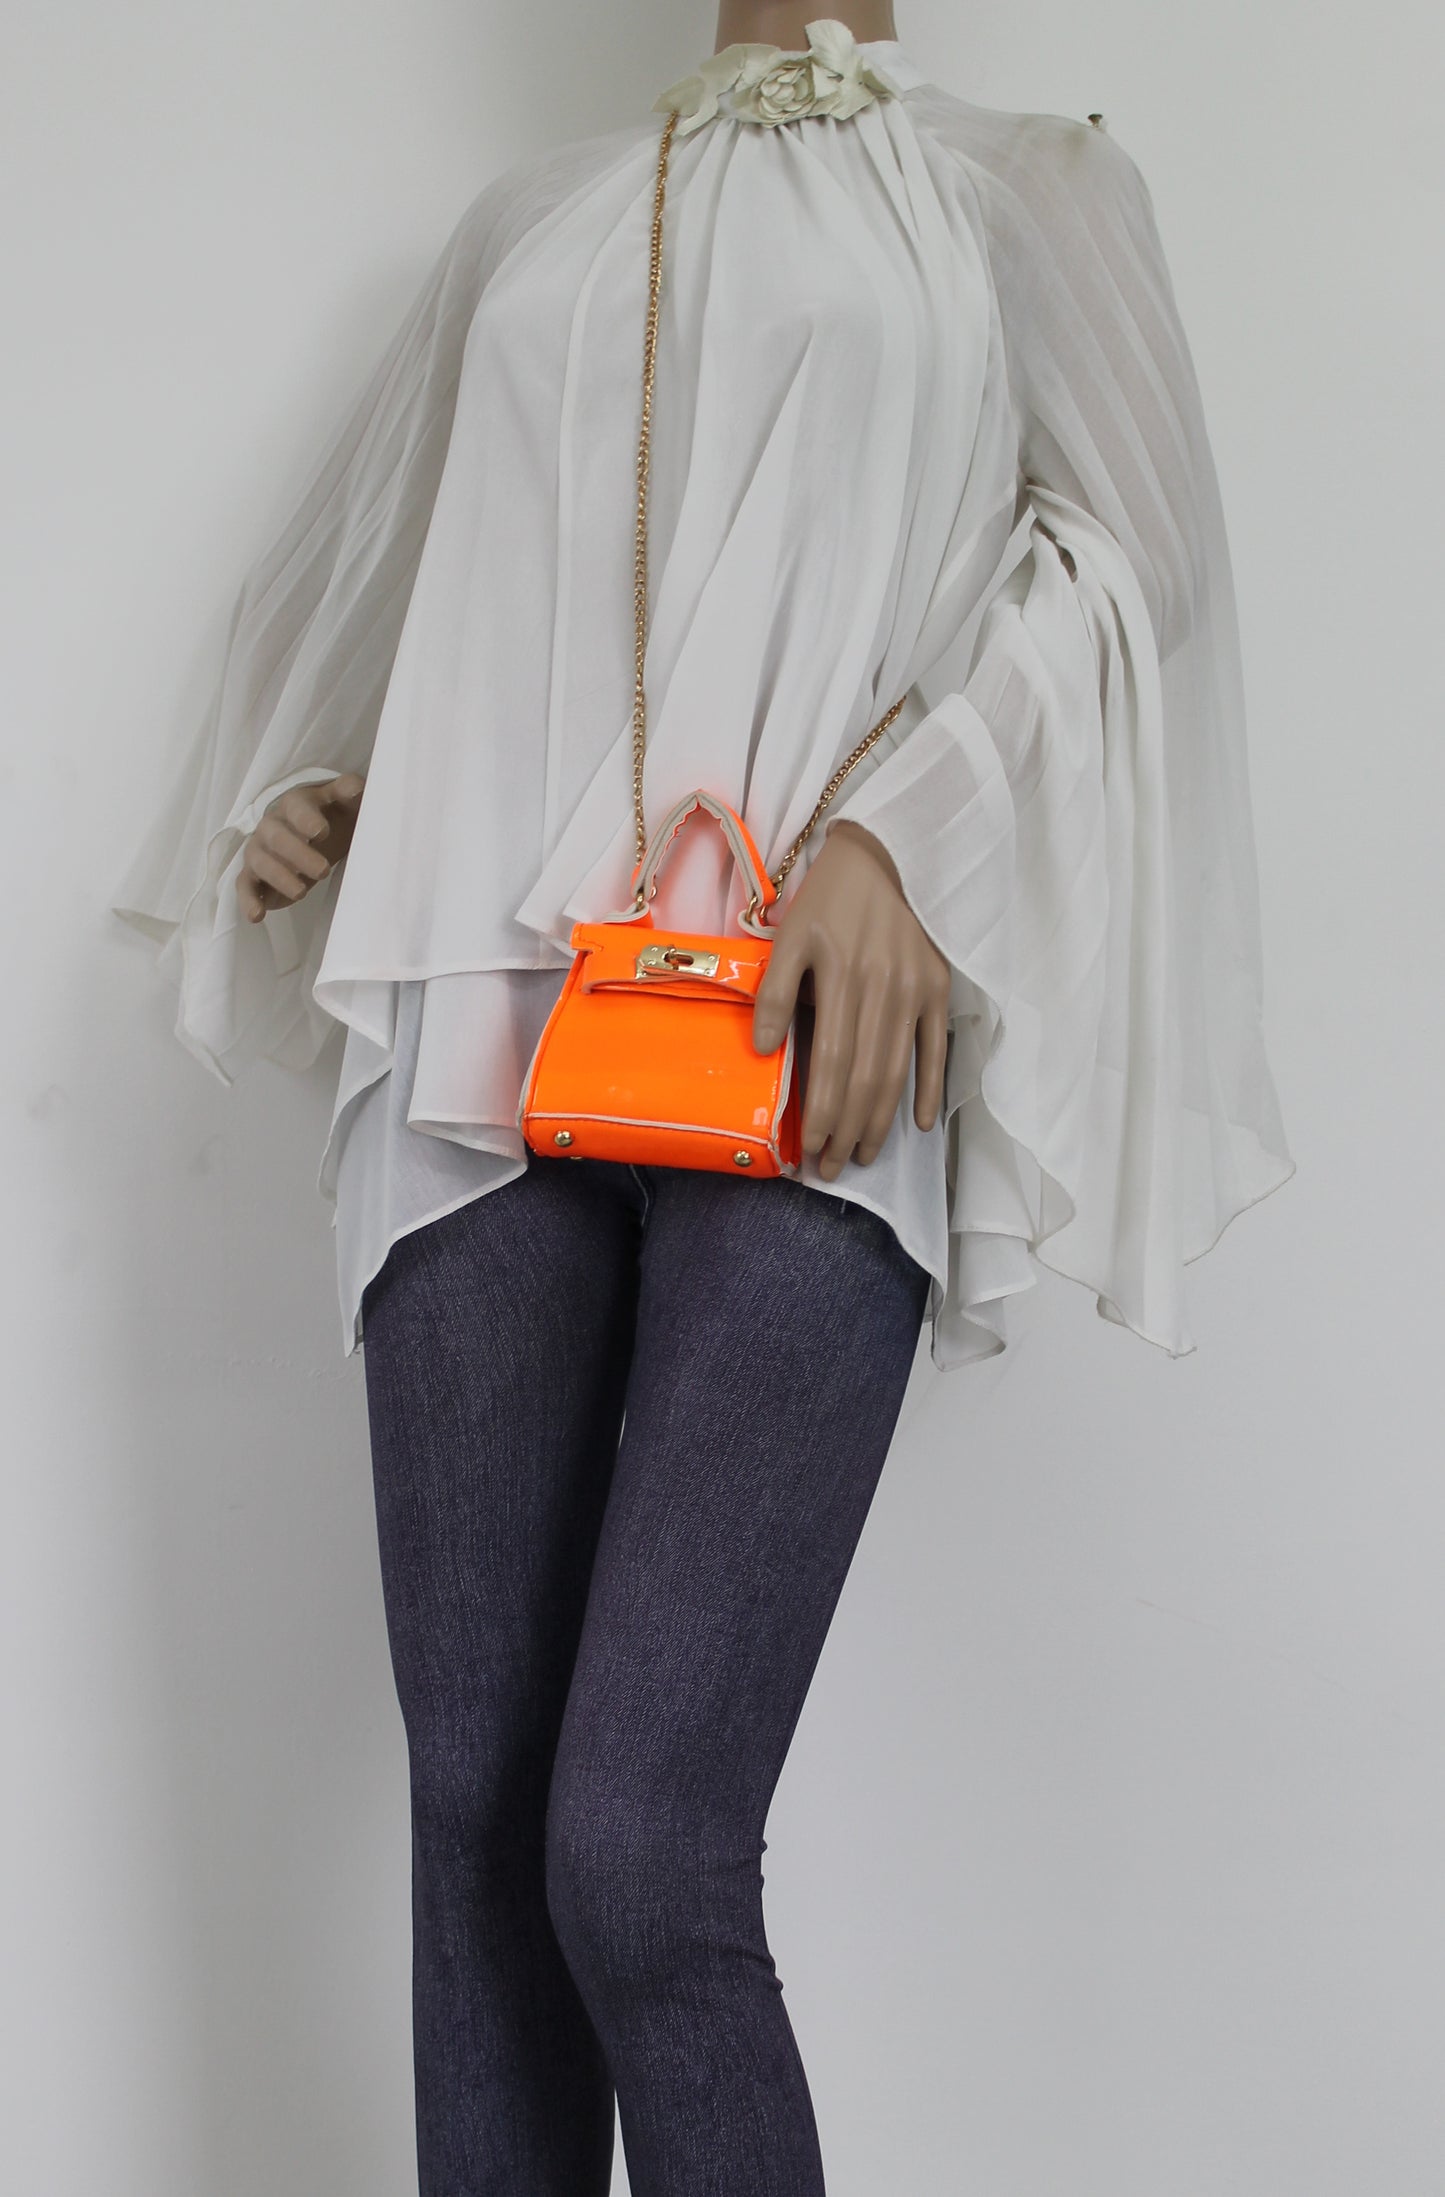 Layla Patent Leather Mini Grab Evening Clutch Crossbody Bag Orange